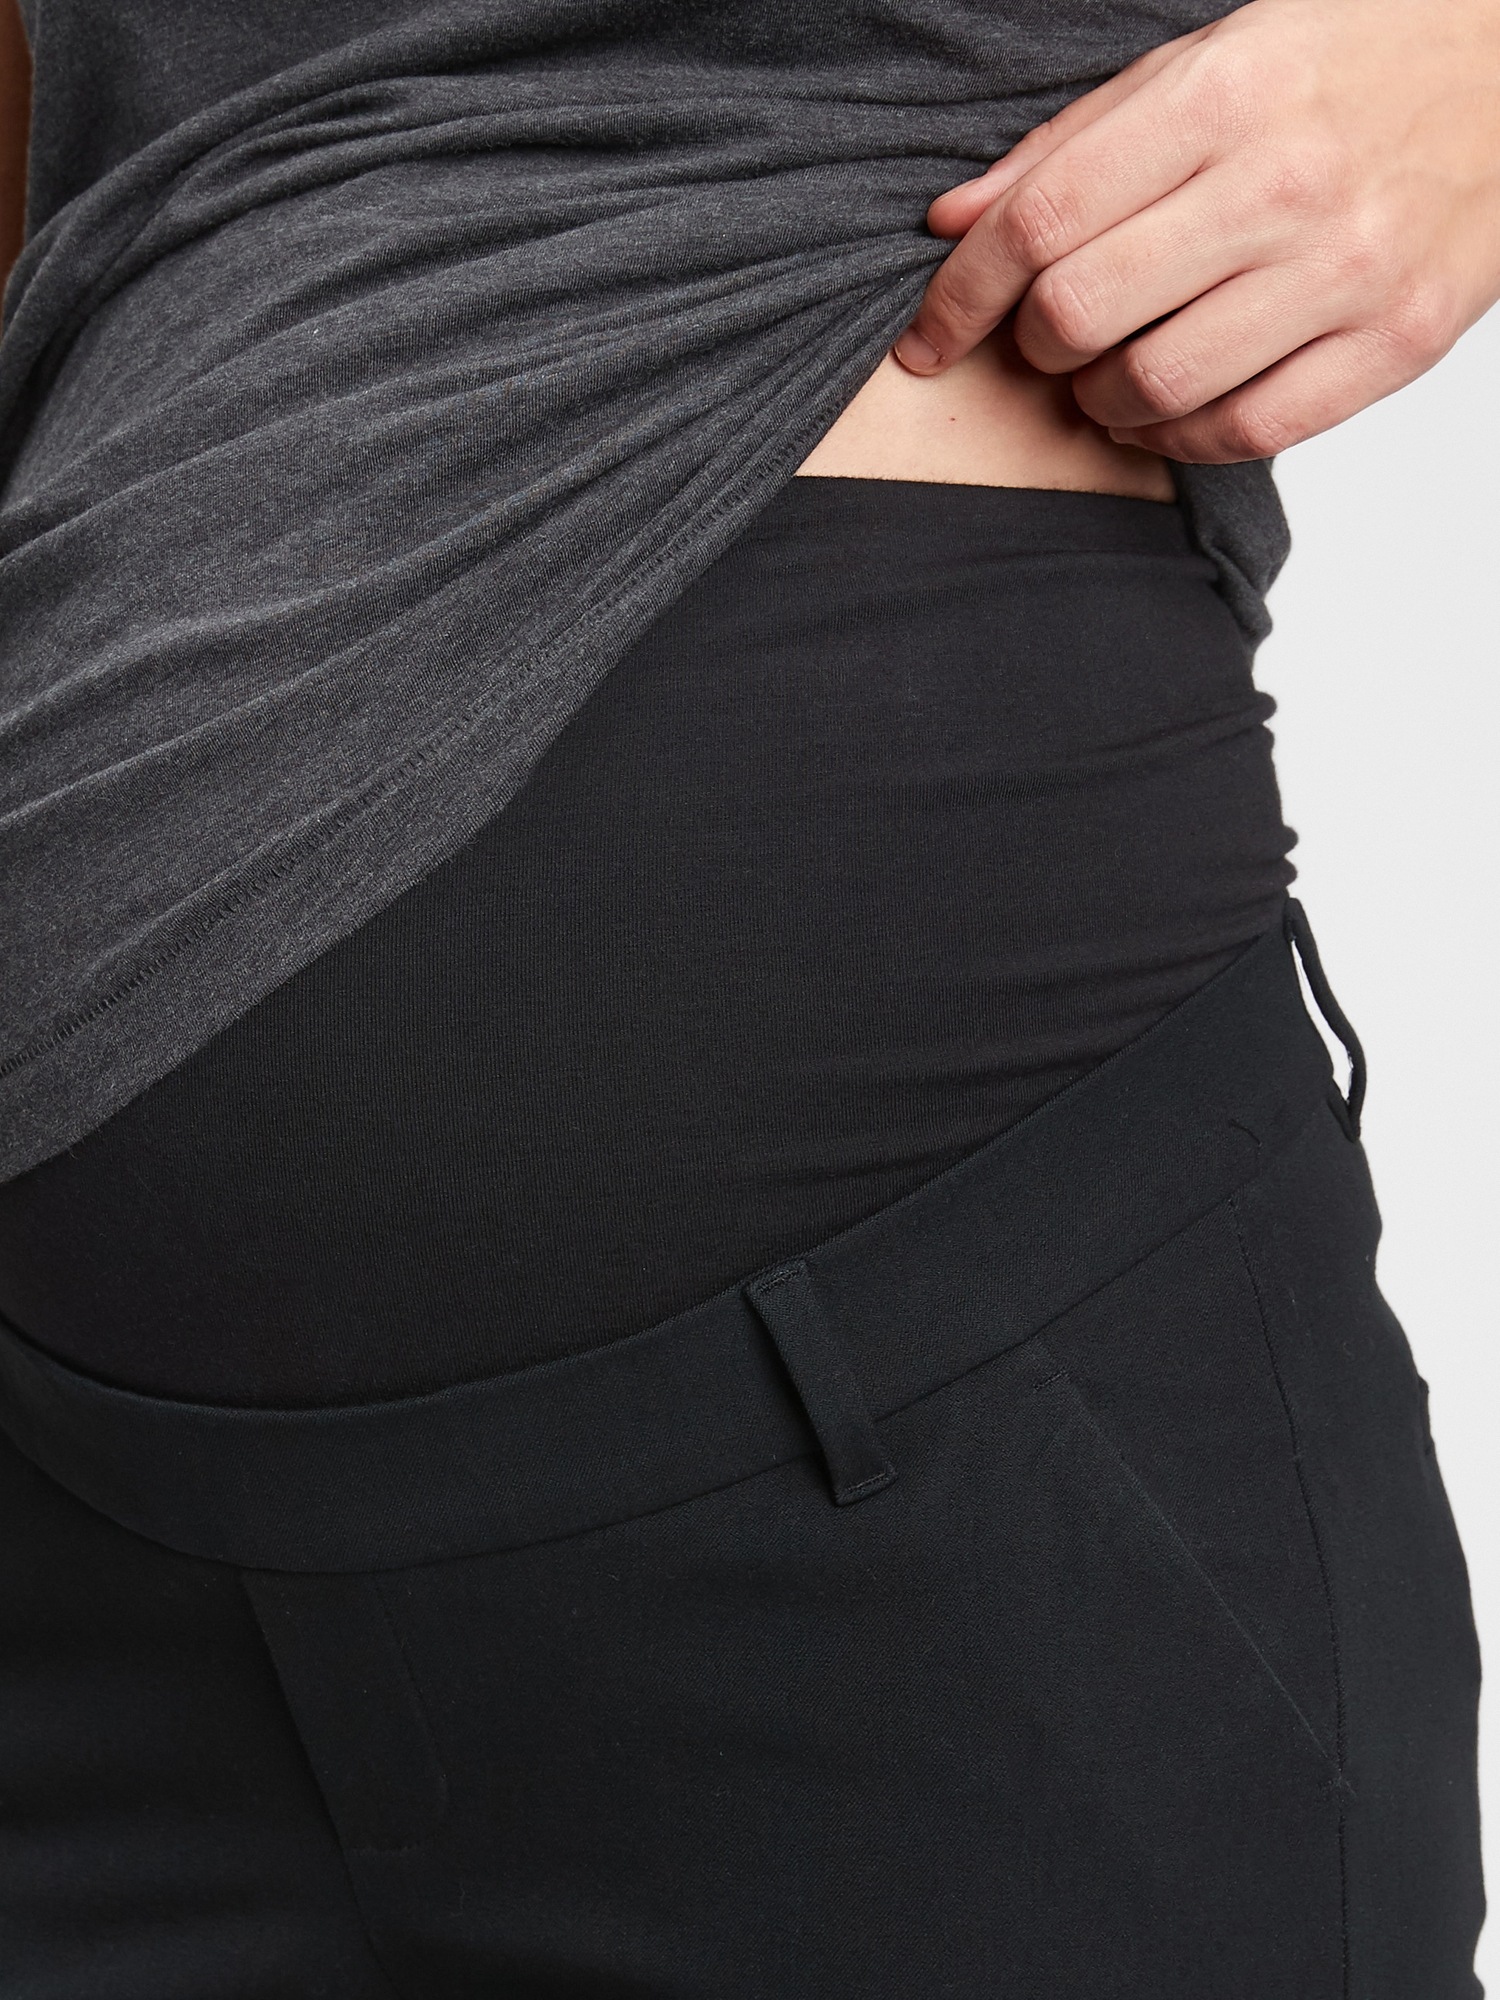 Gap Maternity Hip Slung Fit Stretch Pants